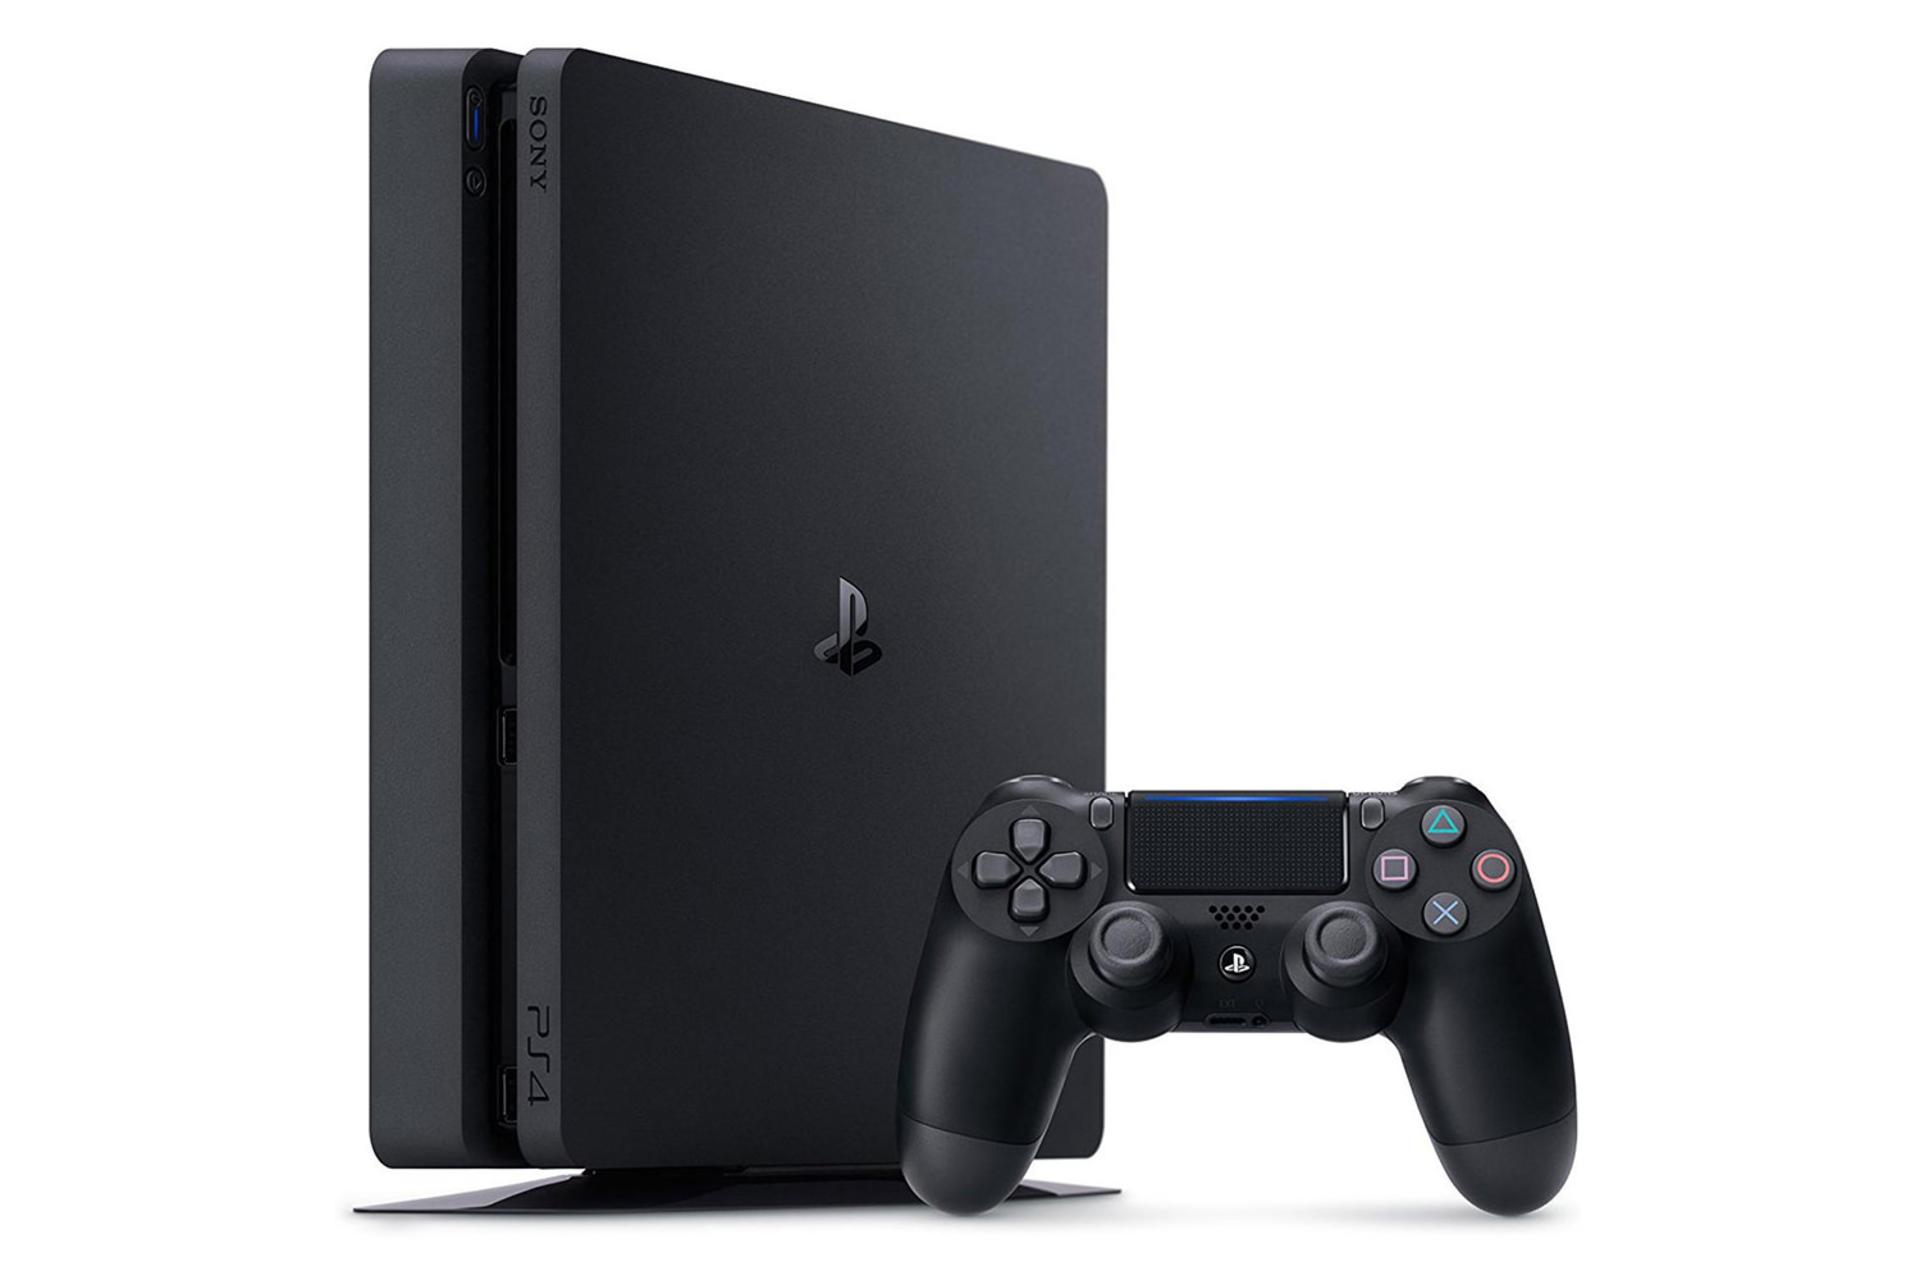 مرجع متخصصين ايران نماي نيمرخ كنسول پلي استيشن ۴ اسليم رنگ مشكي به همراه دسته / Sony Playstation 4 Slim